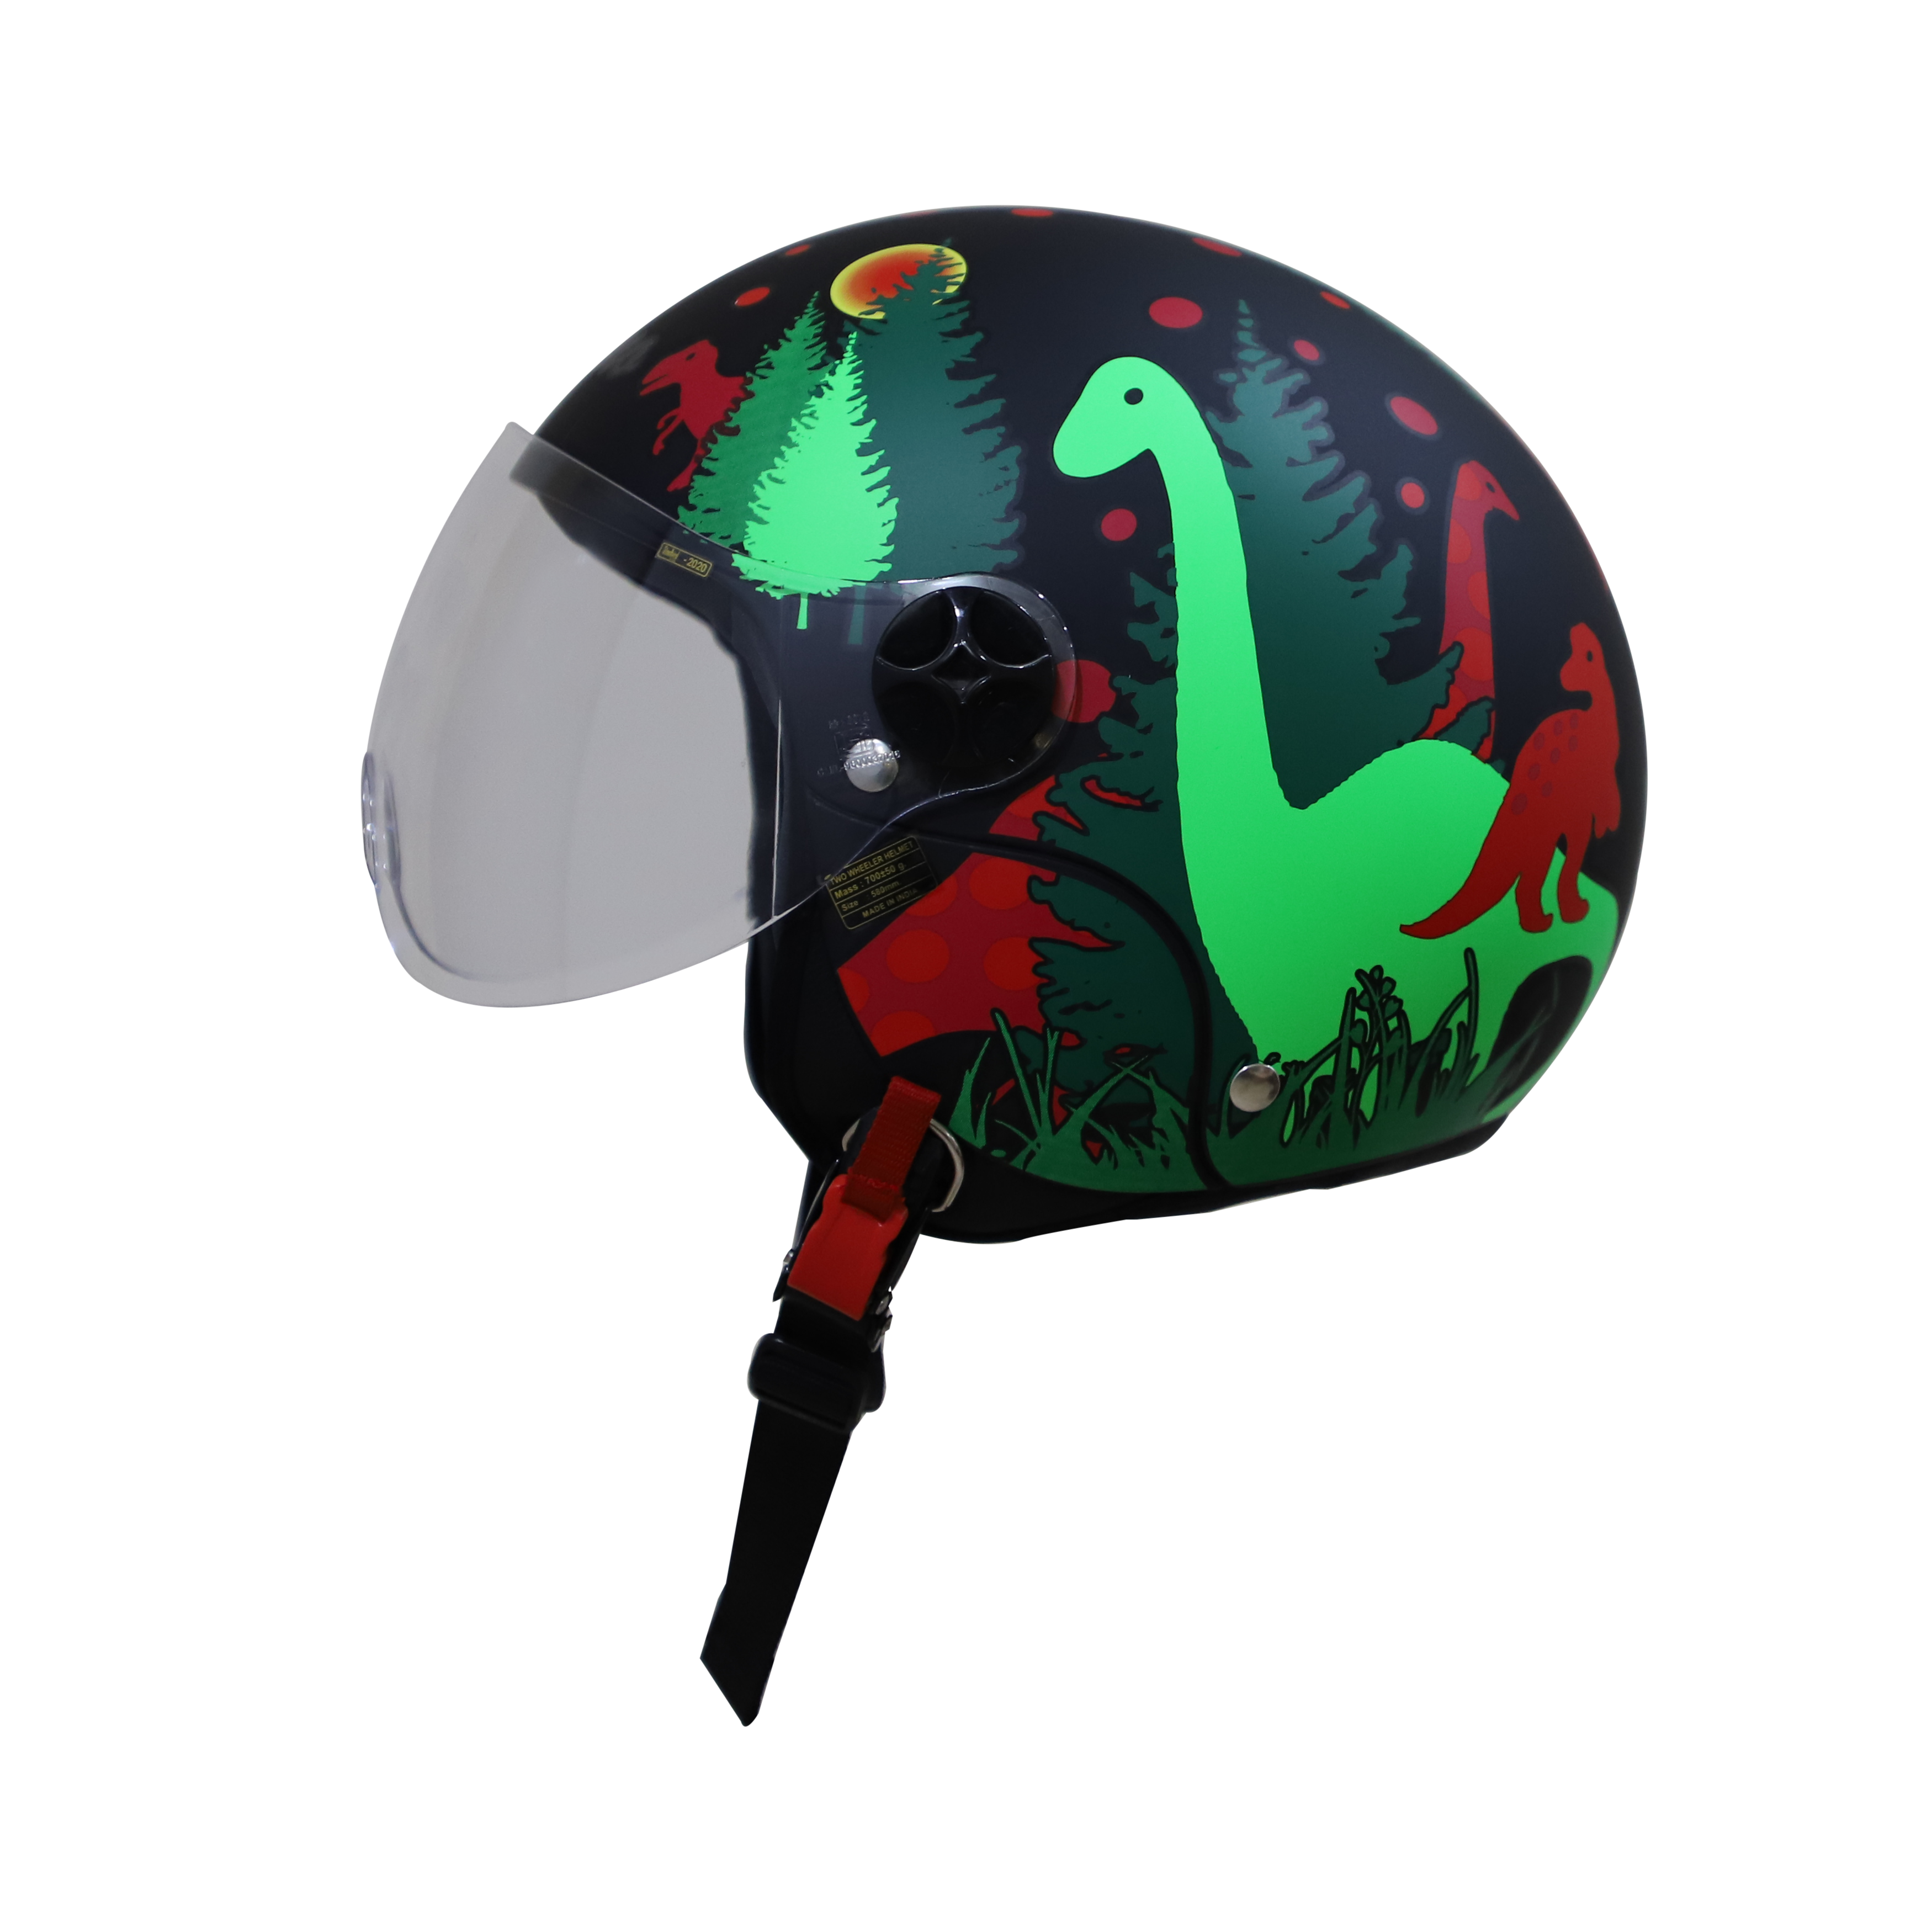 Steelbird Dino Open Face ISI Certified Helmet For Kids (Matt Black Red With Clear Visor)